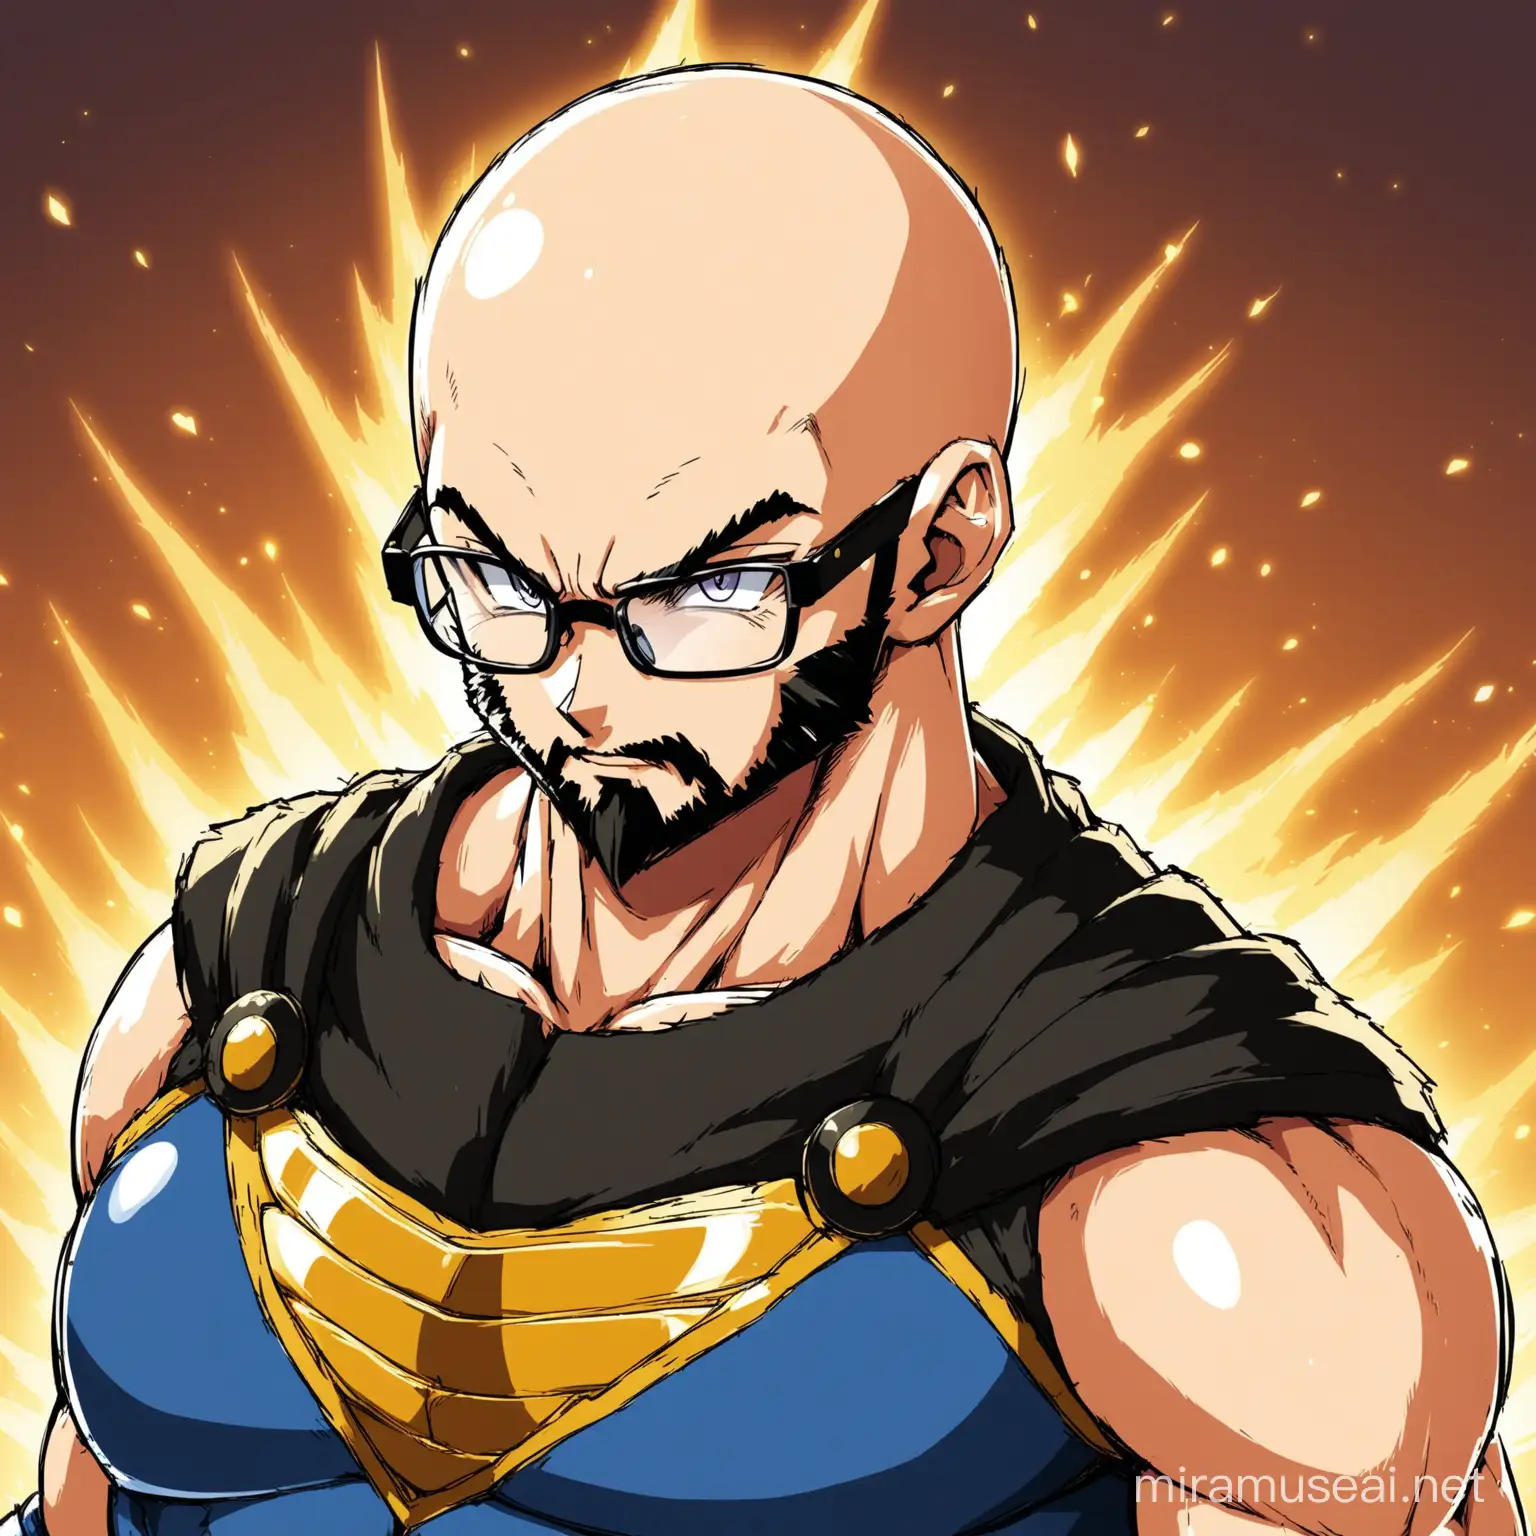 Powerful Super Saiyan Vegeta with Bald Head and Round Glasses